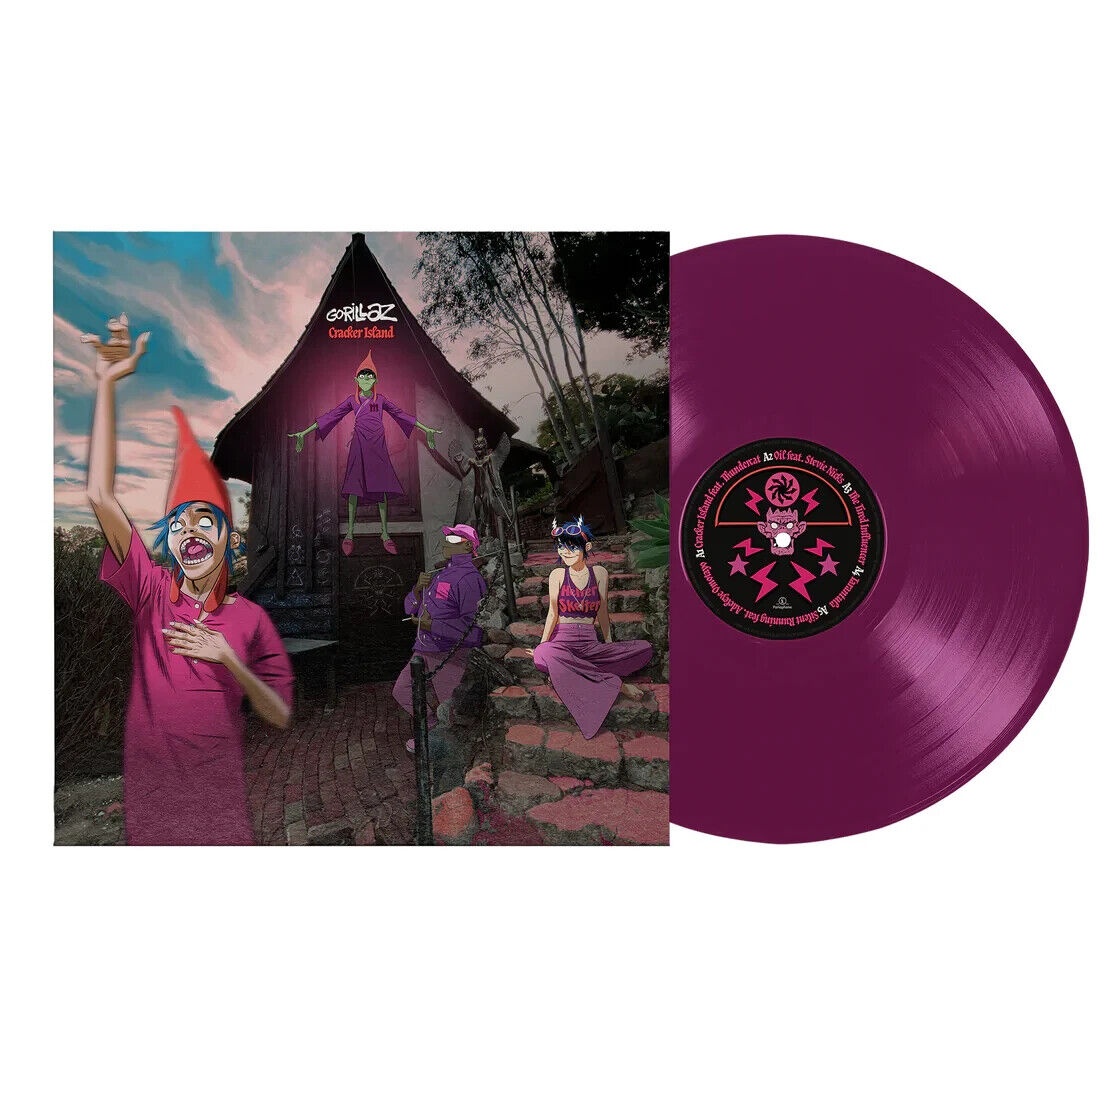 Gorillaz Cracker Island - Exclusive 140g 12” Transparent Purple Vinyl LP - NEW